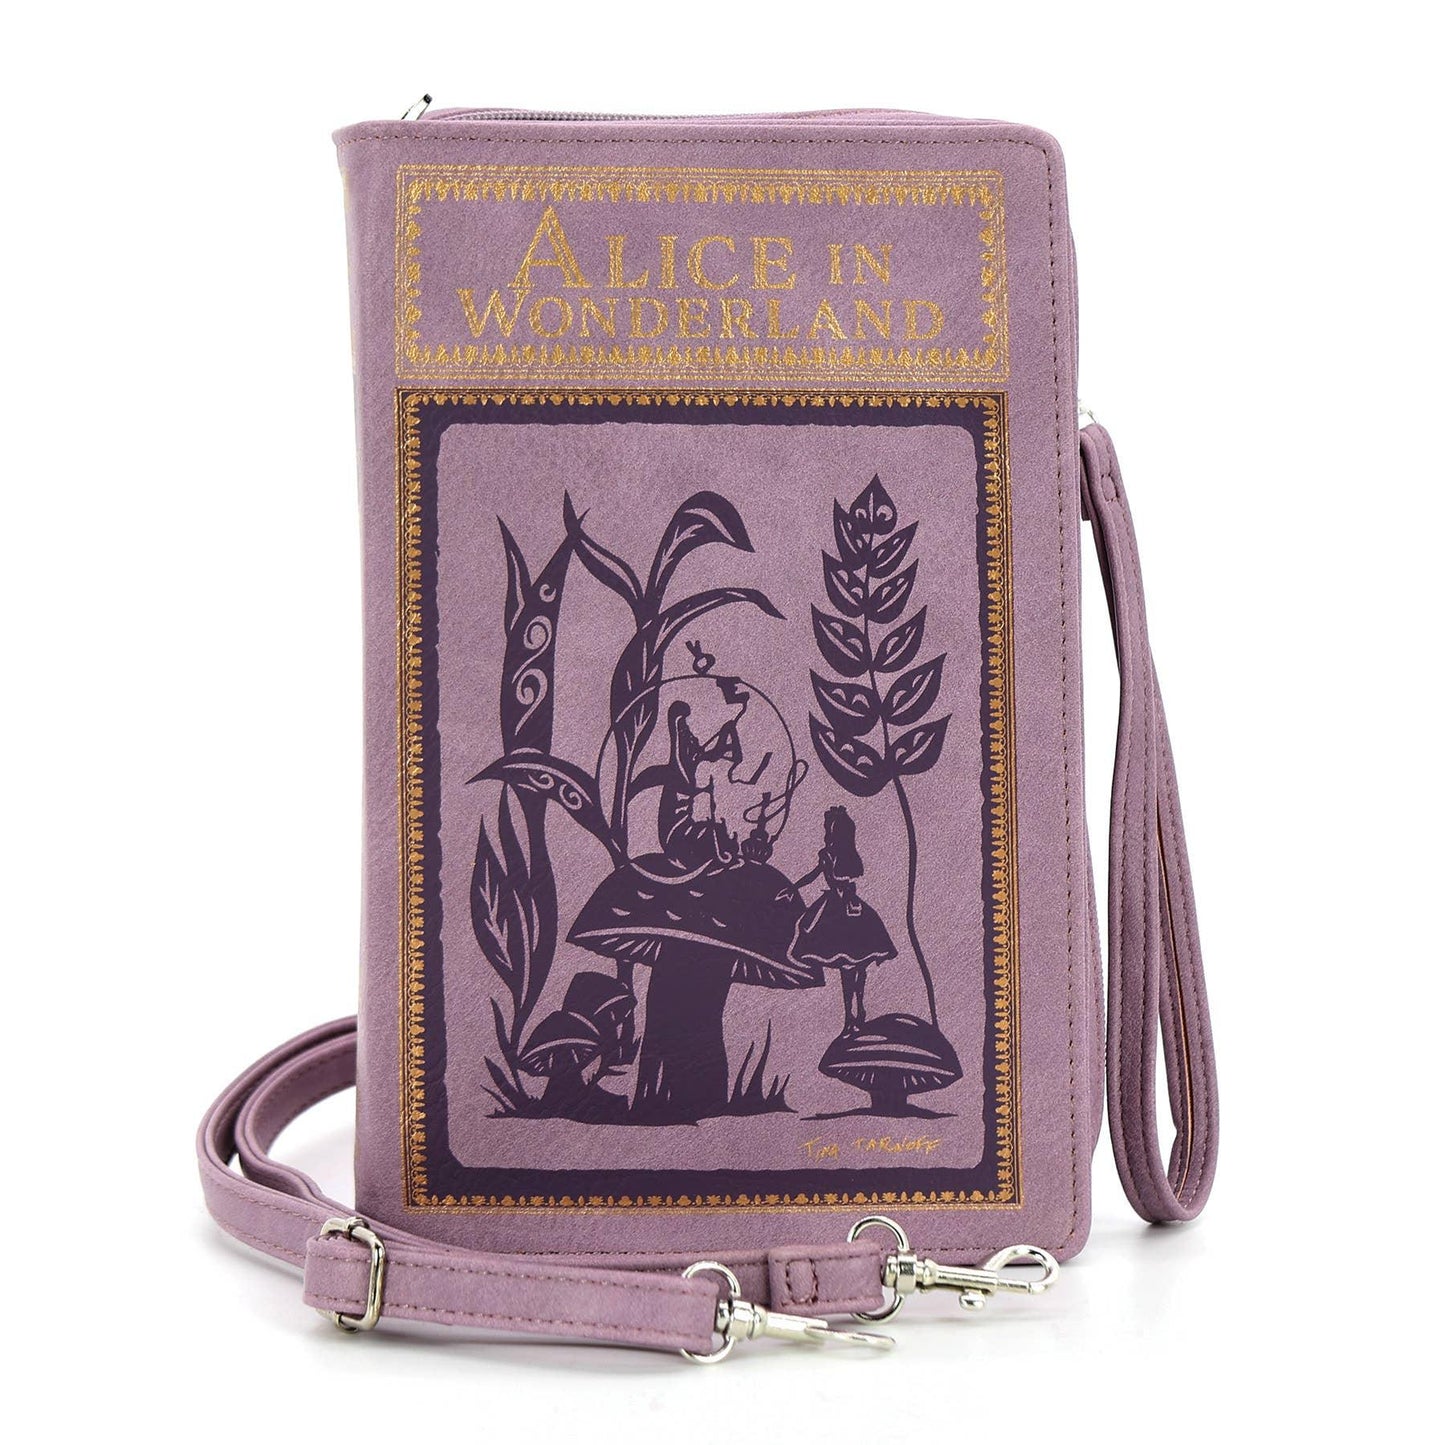 Alice in Wonderland Book Clutch Bag in Vinyl - McCabe's Costumes